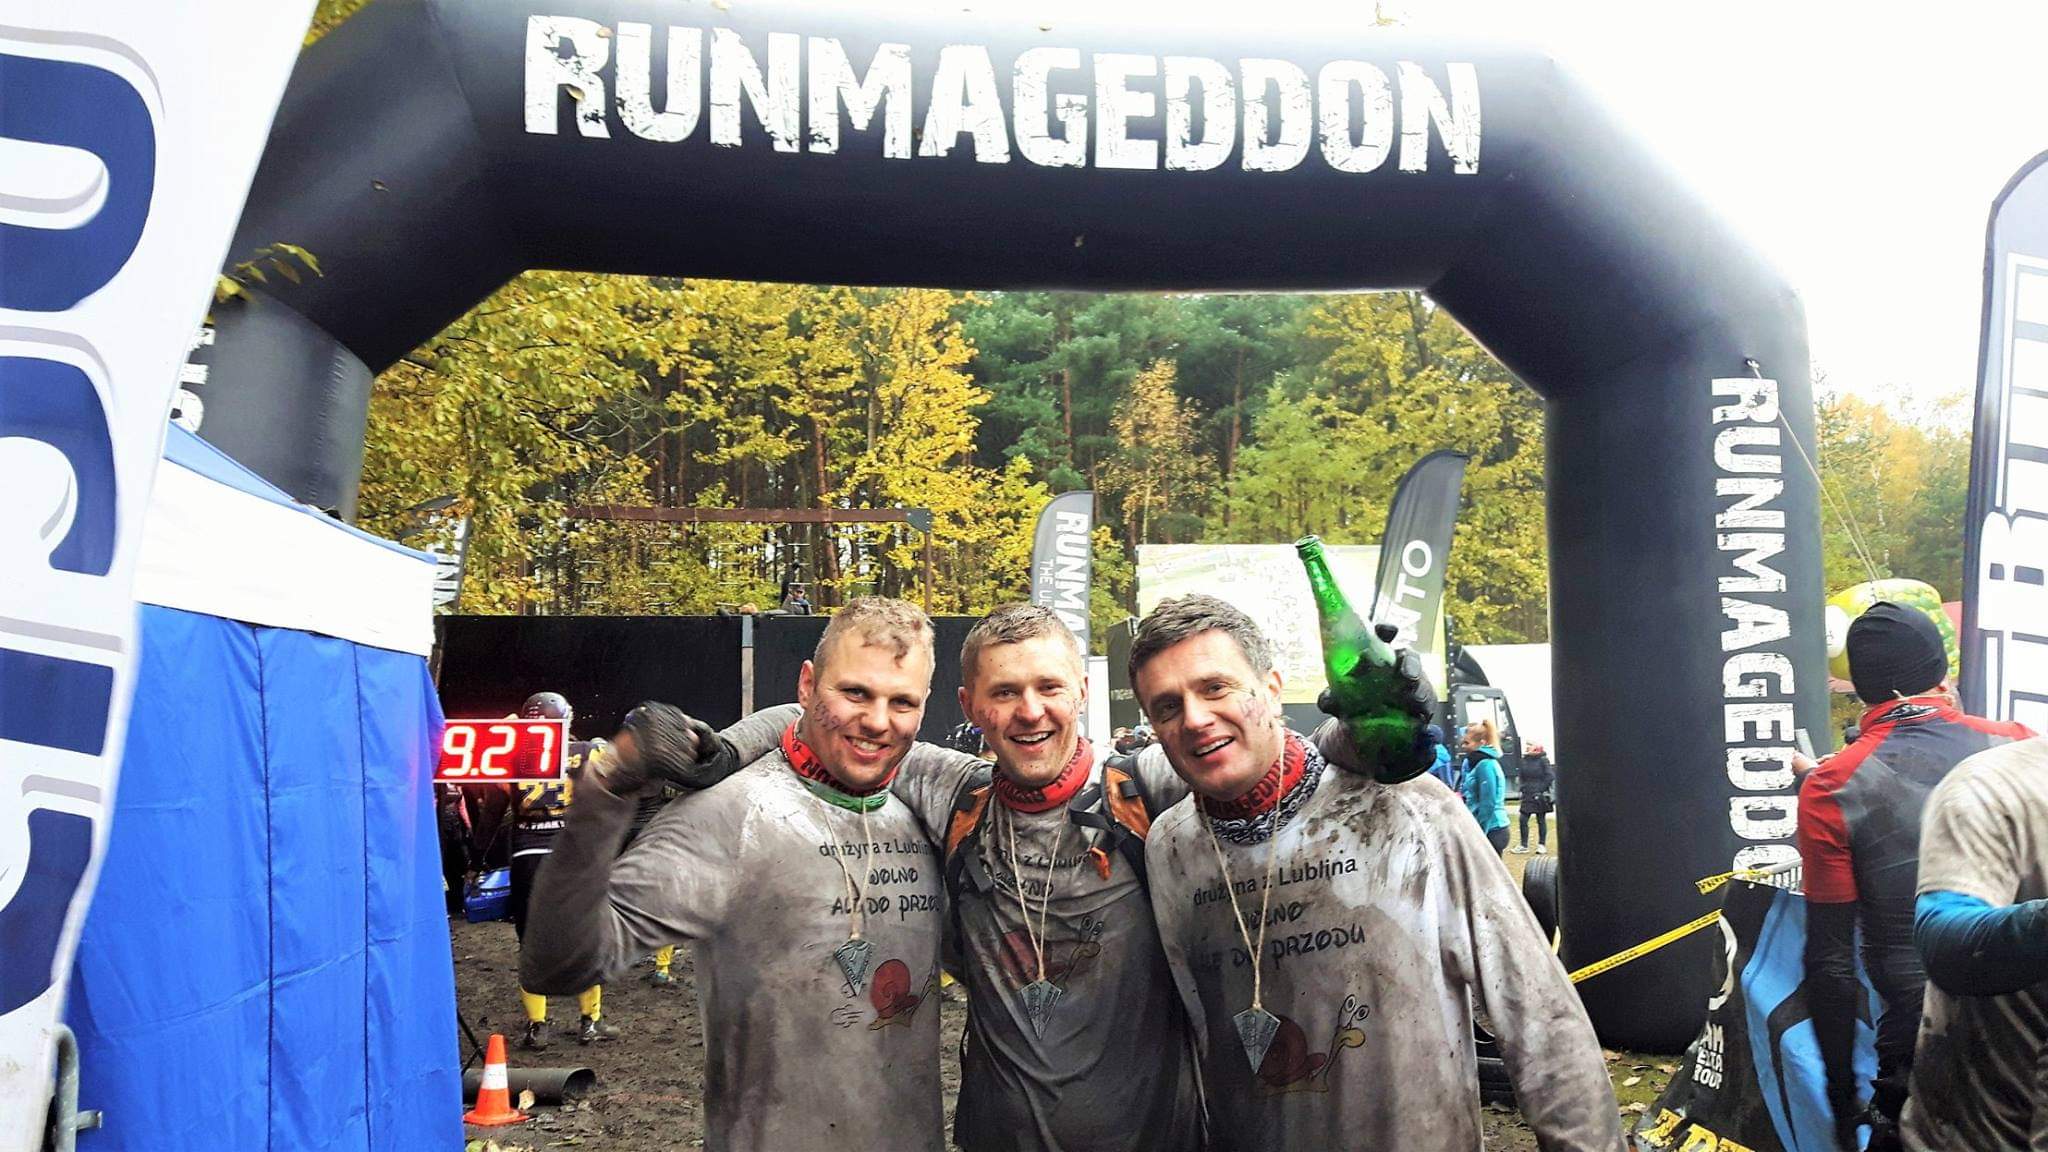 Od lewej: Paweł G., Dominik Hibner i Radek S. podczas Runmageddonu